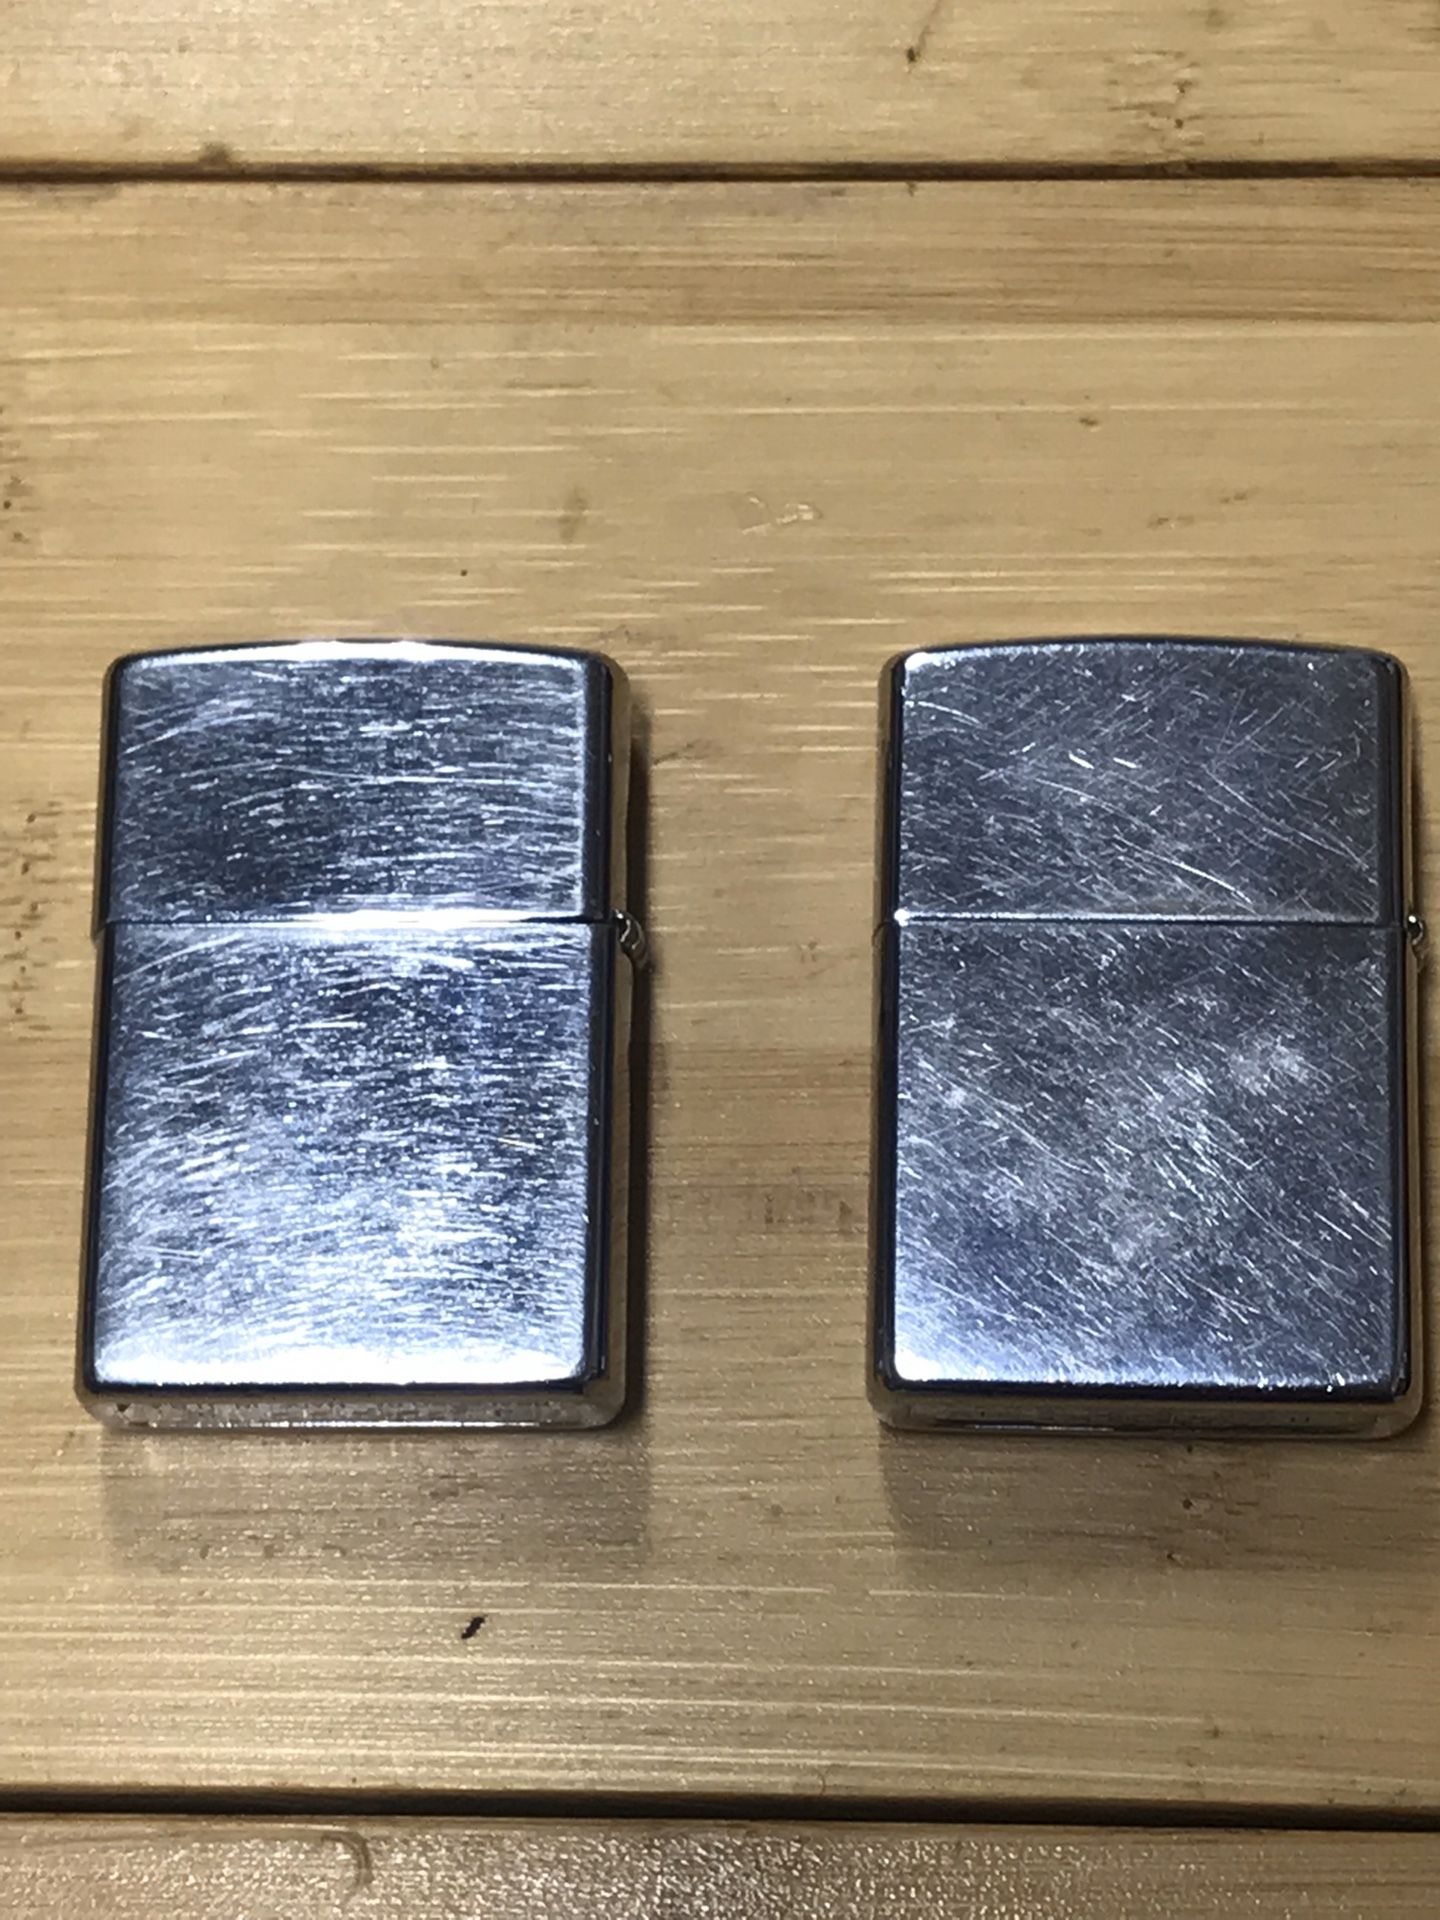 2 zippo lighters